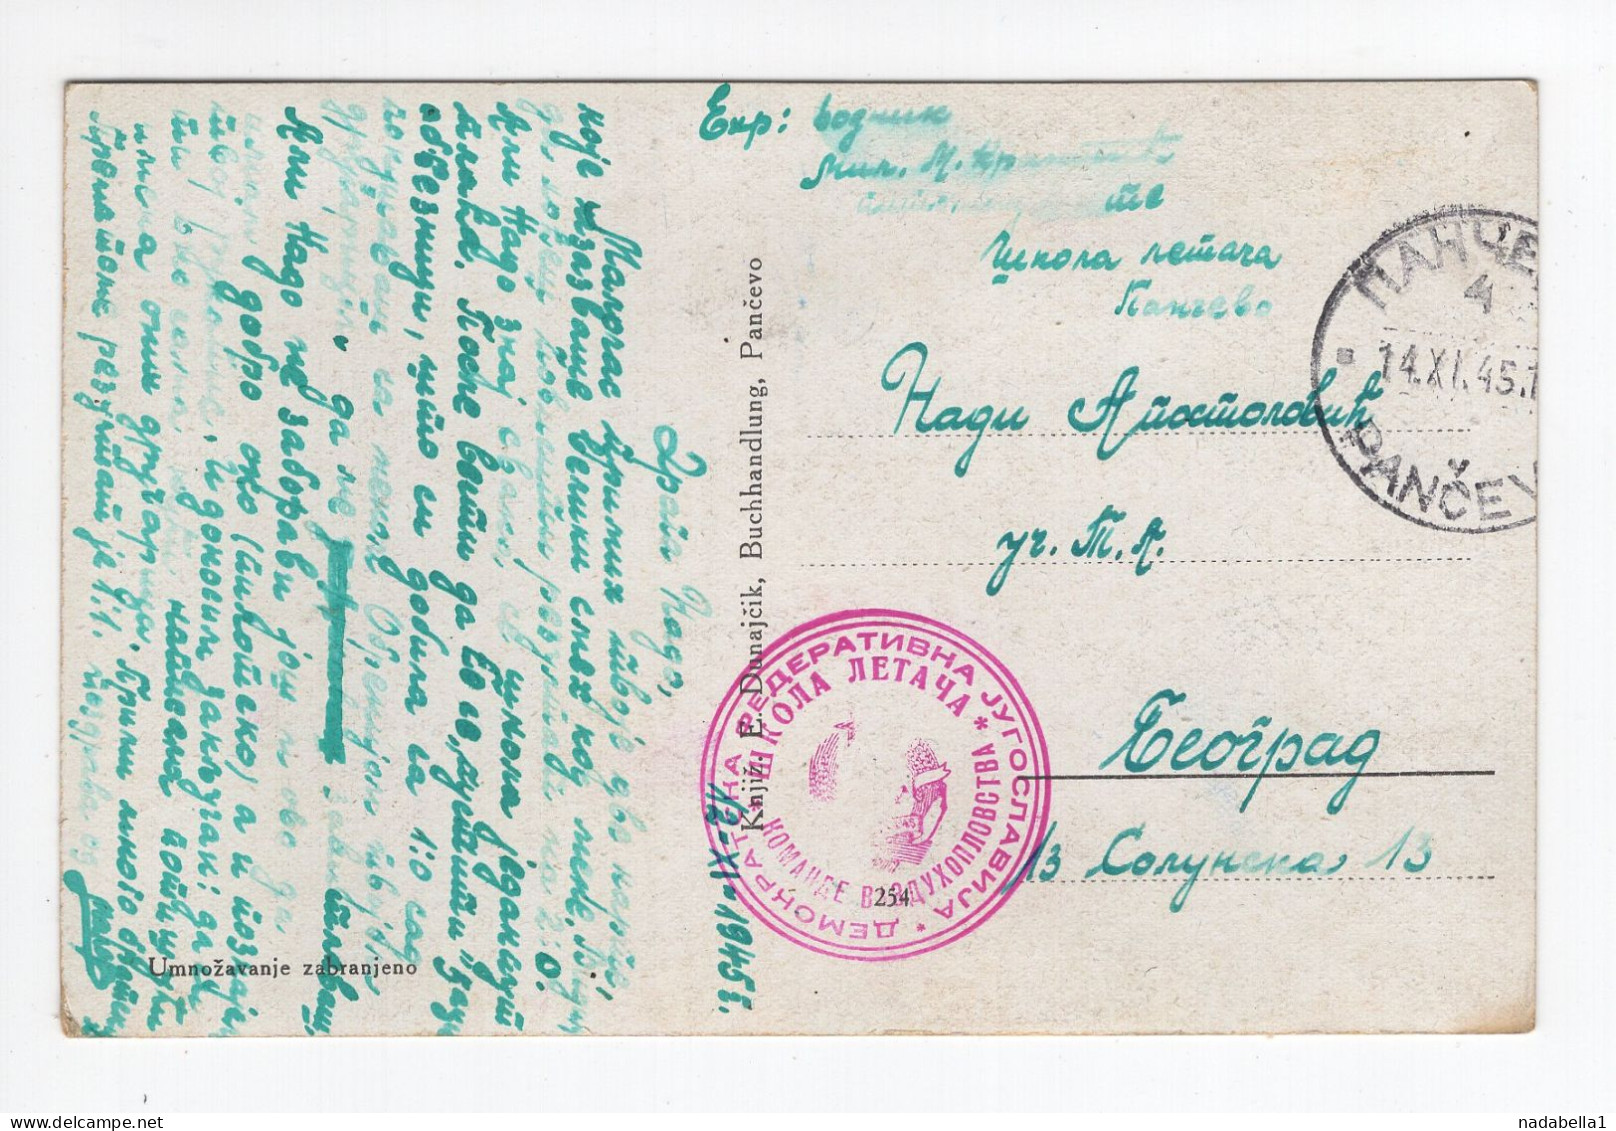 1945. YUGOSLAVIA,SERBIA,PANCEVO,AVIATION COMMAND,FLYING SCHOOL,POSTCARD,USED - Jugoslawien